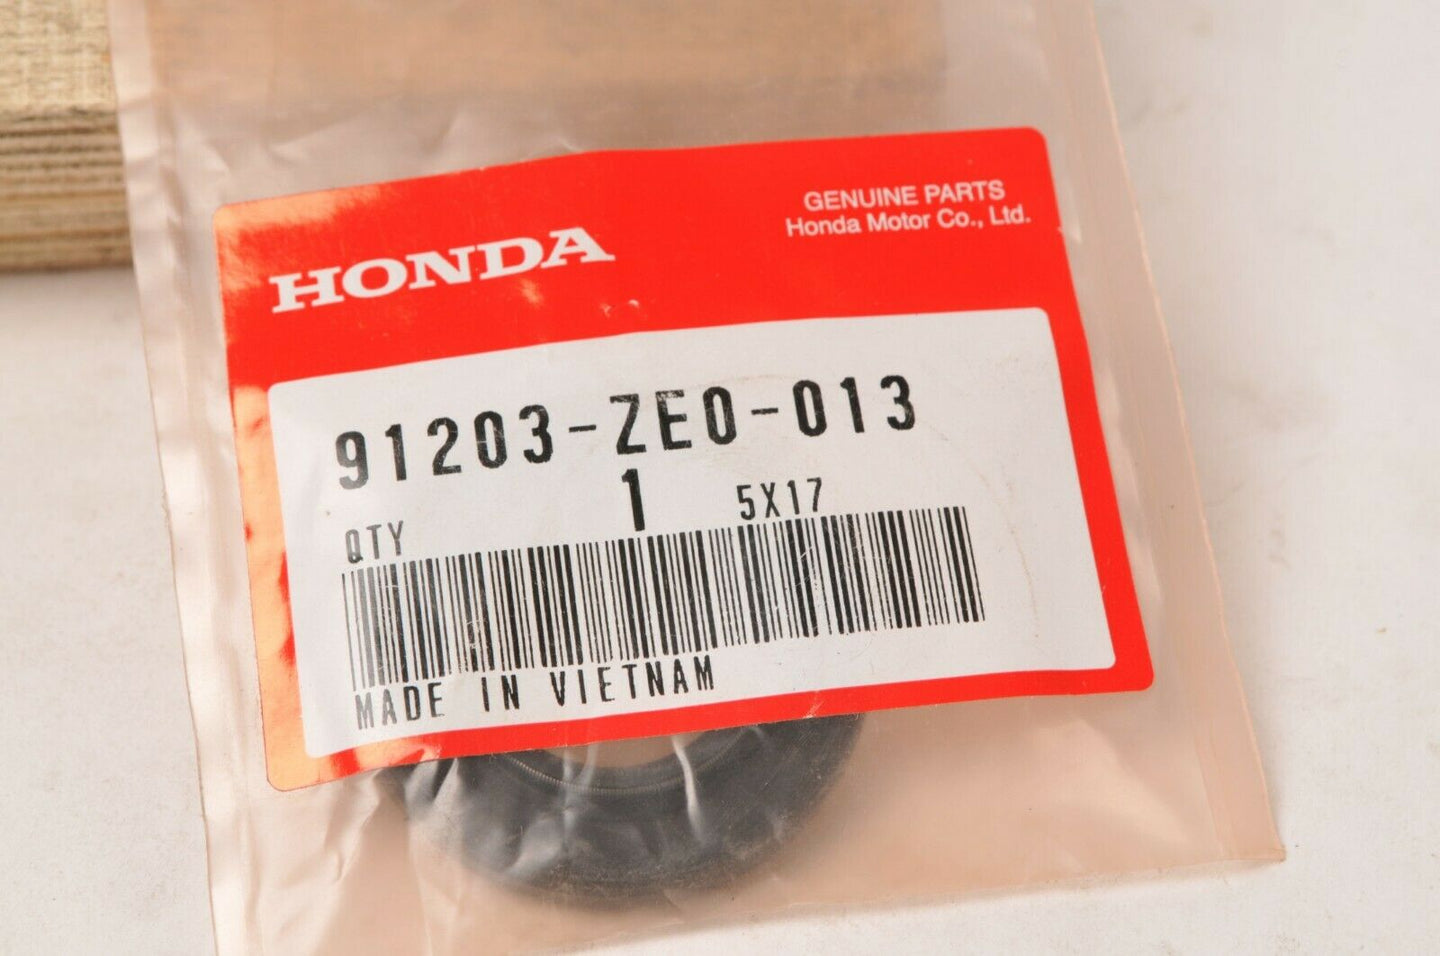 Genuine Honda 91203-ZE0-013 Oil Seal 22x41x6 - Crankcase Cover GX120 ++